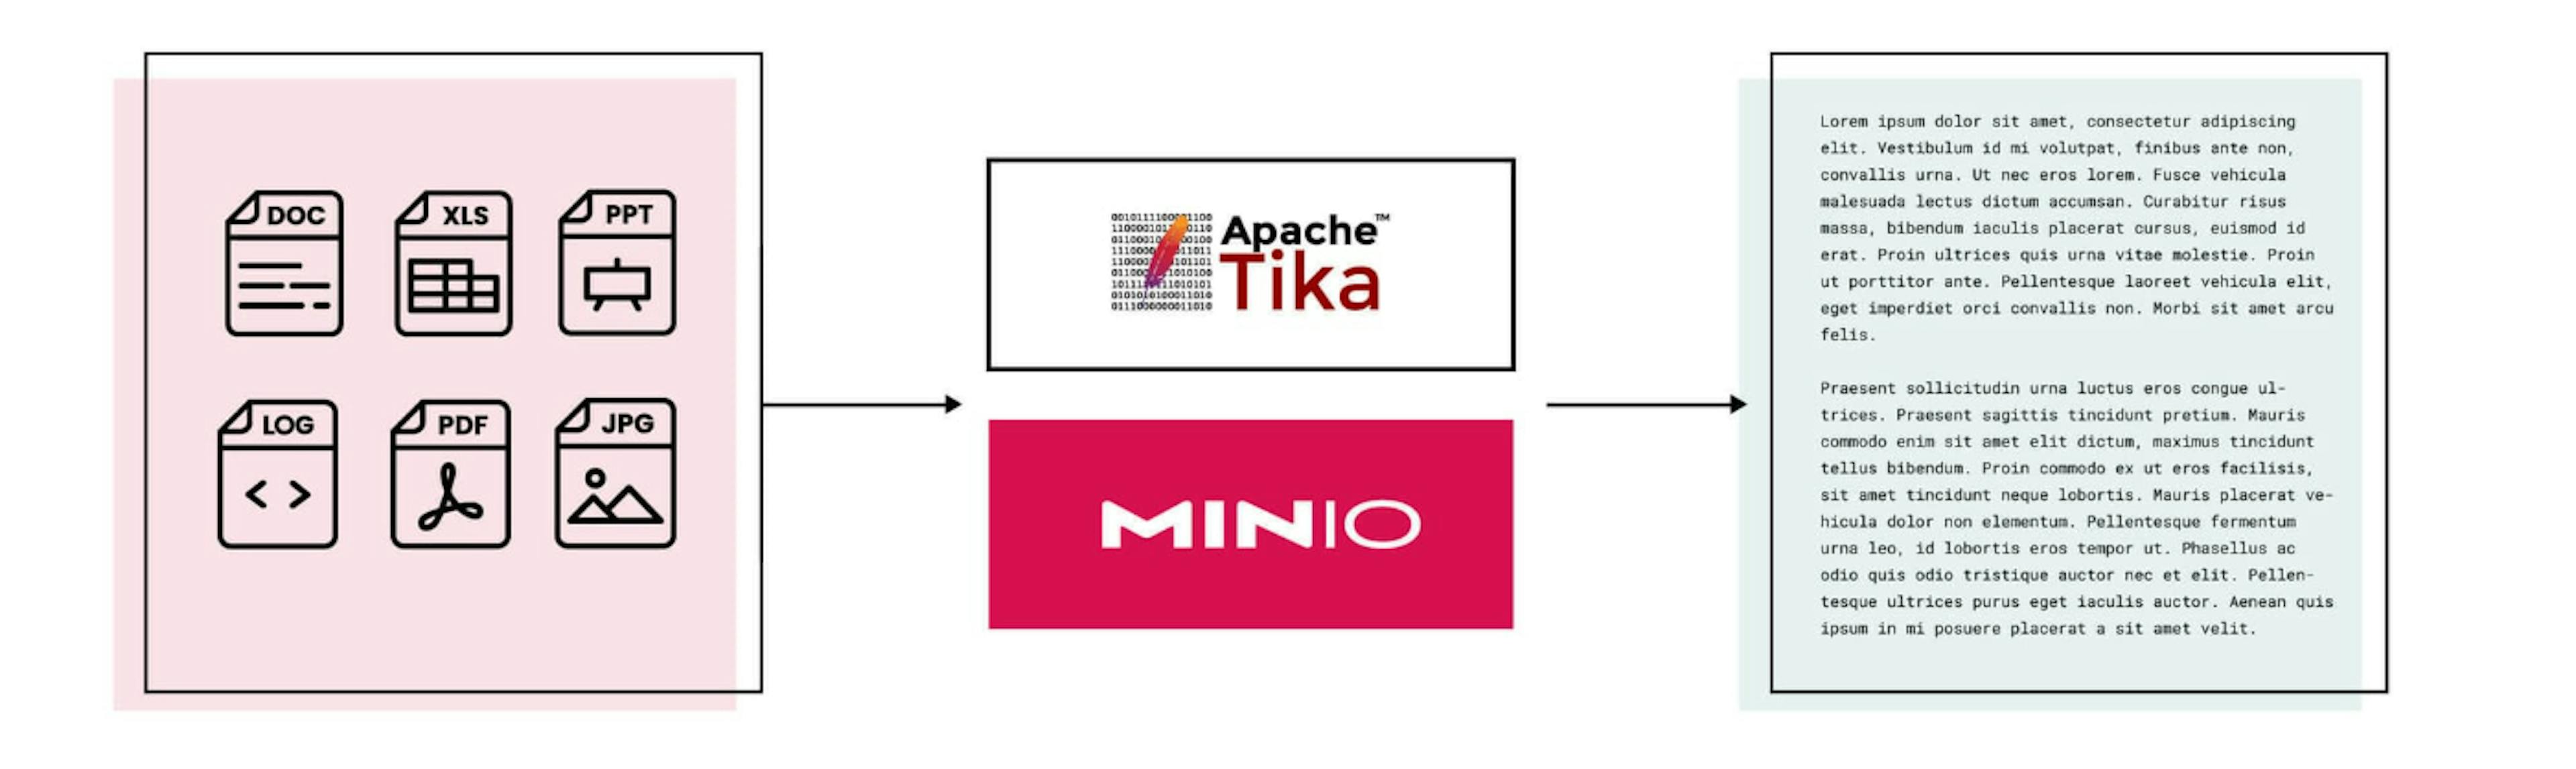 featured image - 利用 MinIO 和 Apache Tika 进行自动文本提取和分析